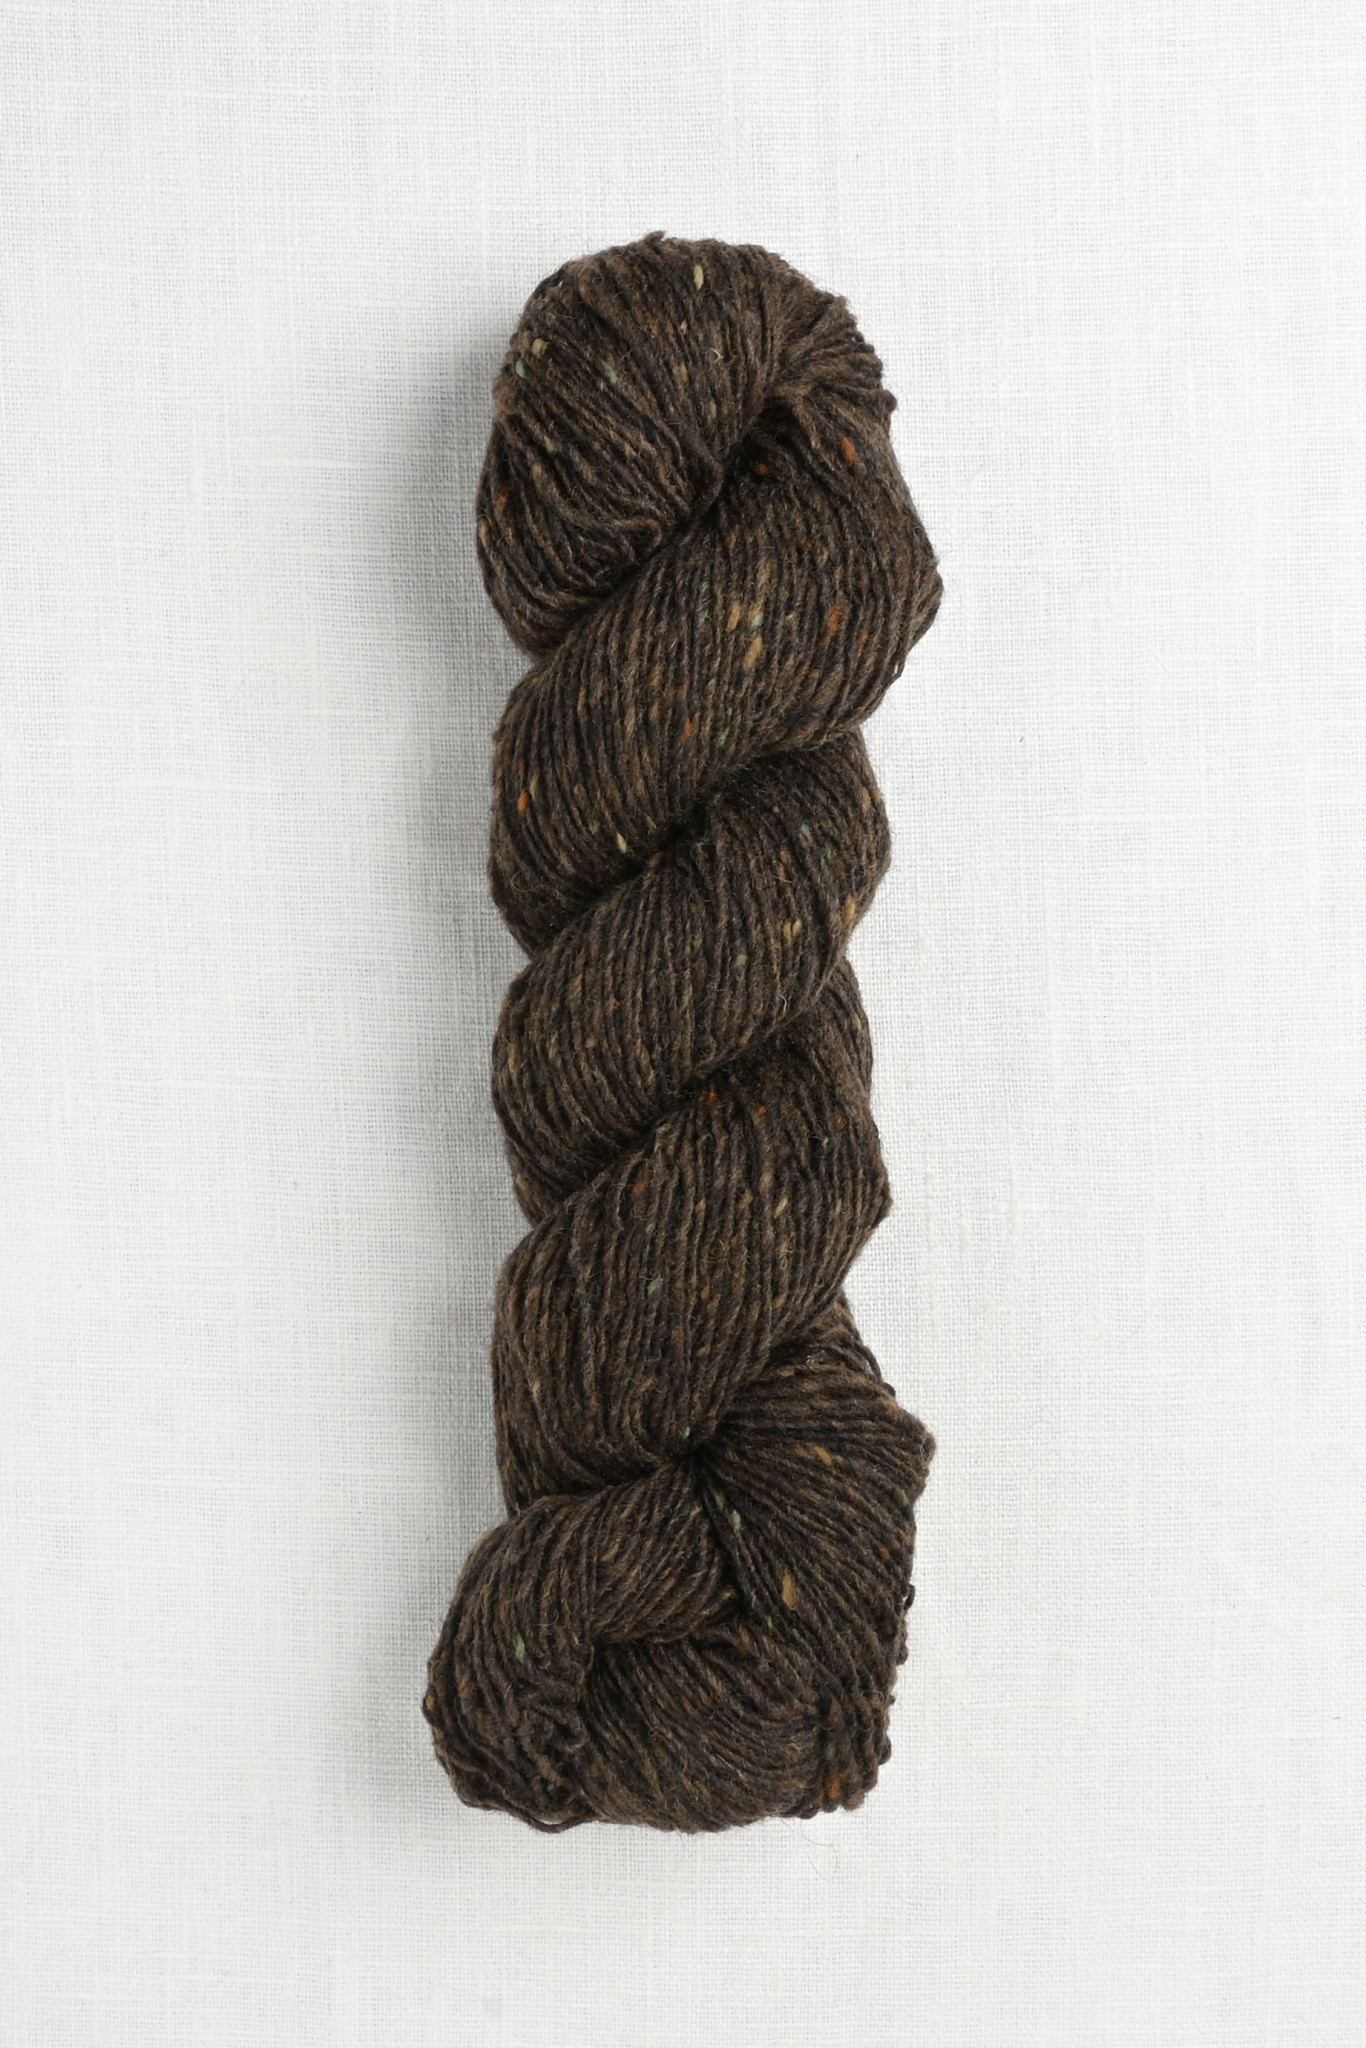 Ingen måde Stuepige slids Isager Tweed Chocolate - Wool and Company Fine Yarn